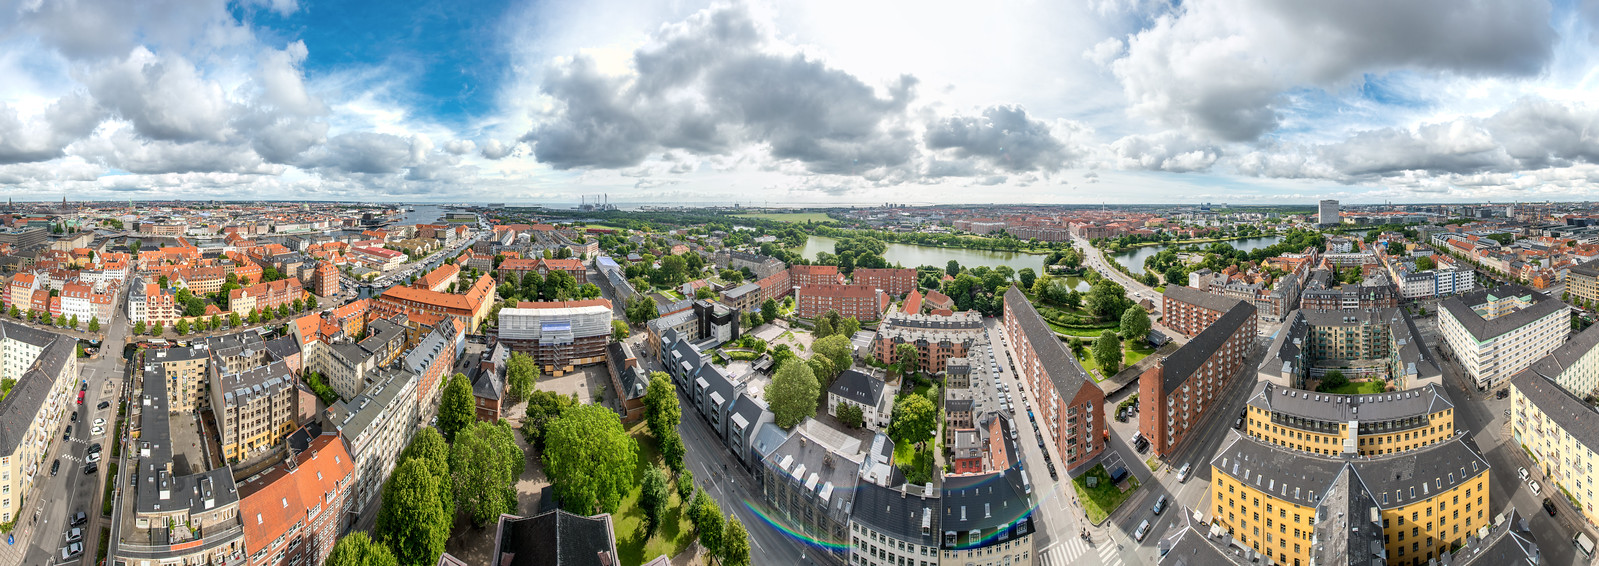 365 Panorama | Copenhagen, Denmark 2015